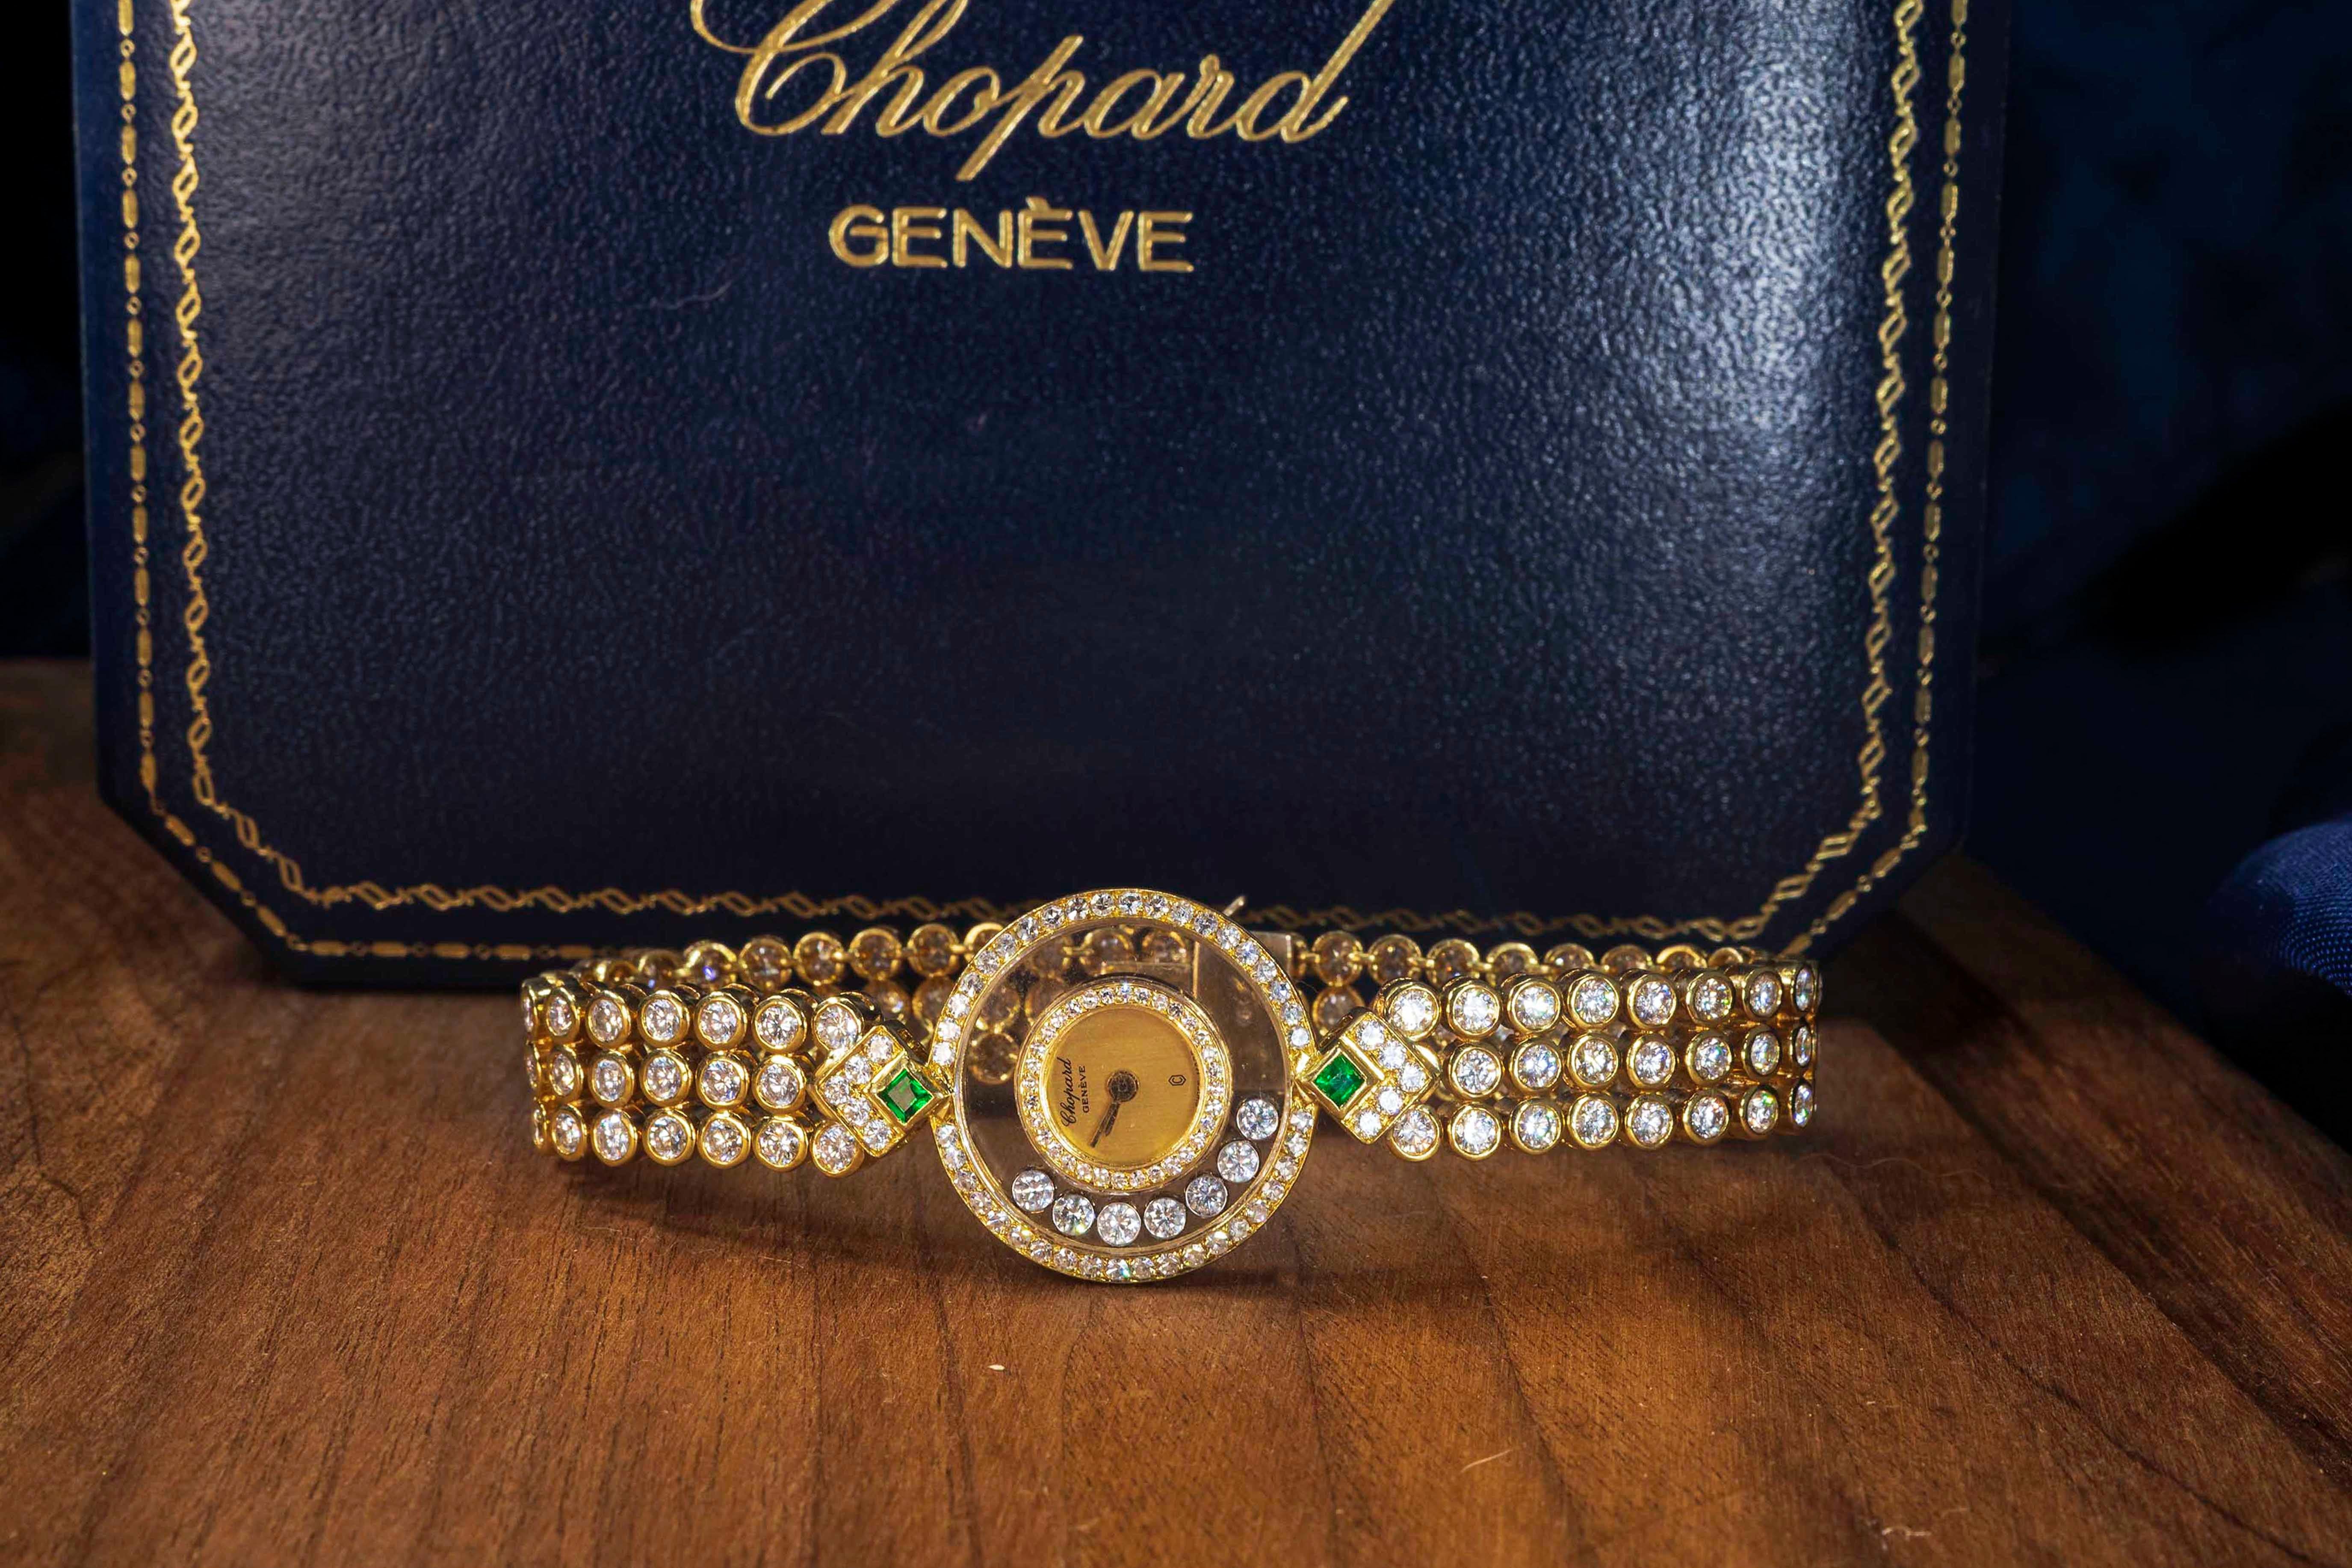 1980s-1990s Chopard Happy Diamond Emerald Approx 14 Carat Bracelet Watch 10